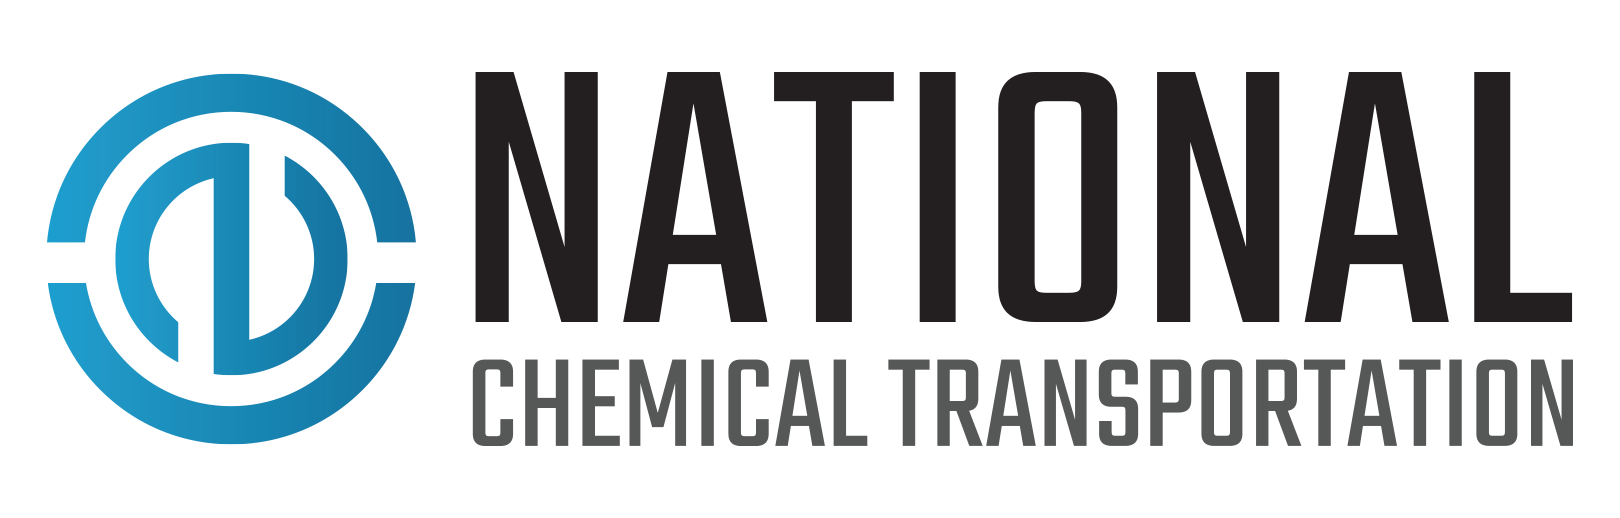 National Chemical Transport